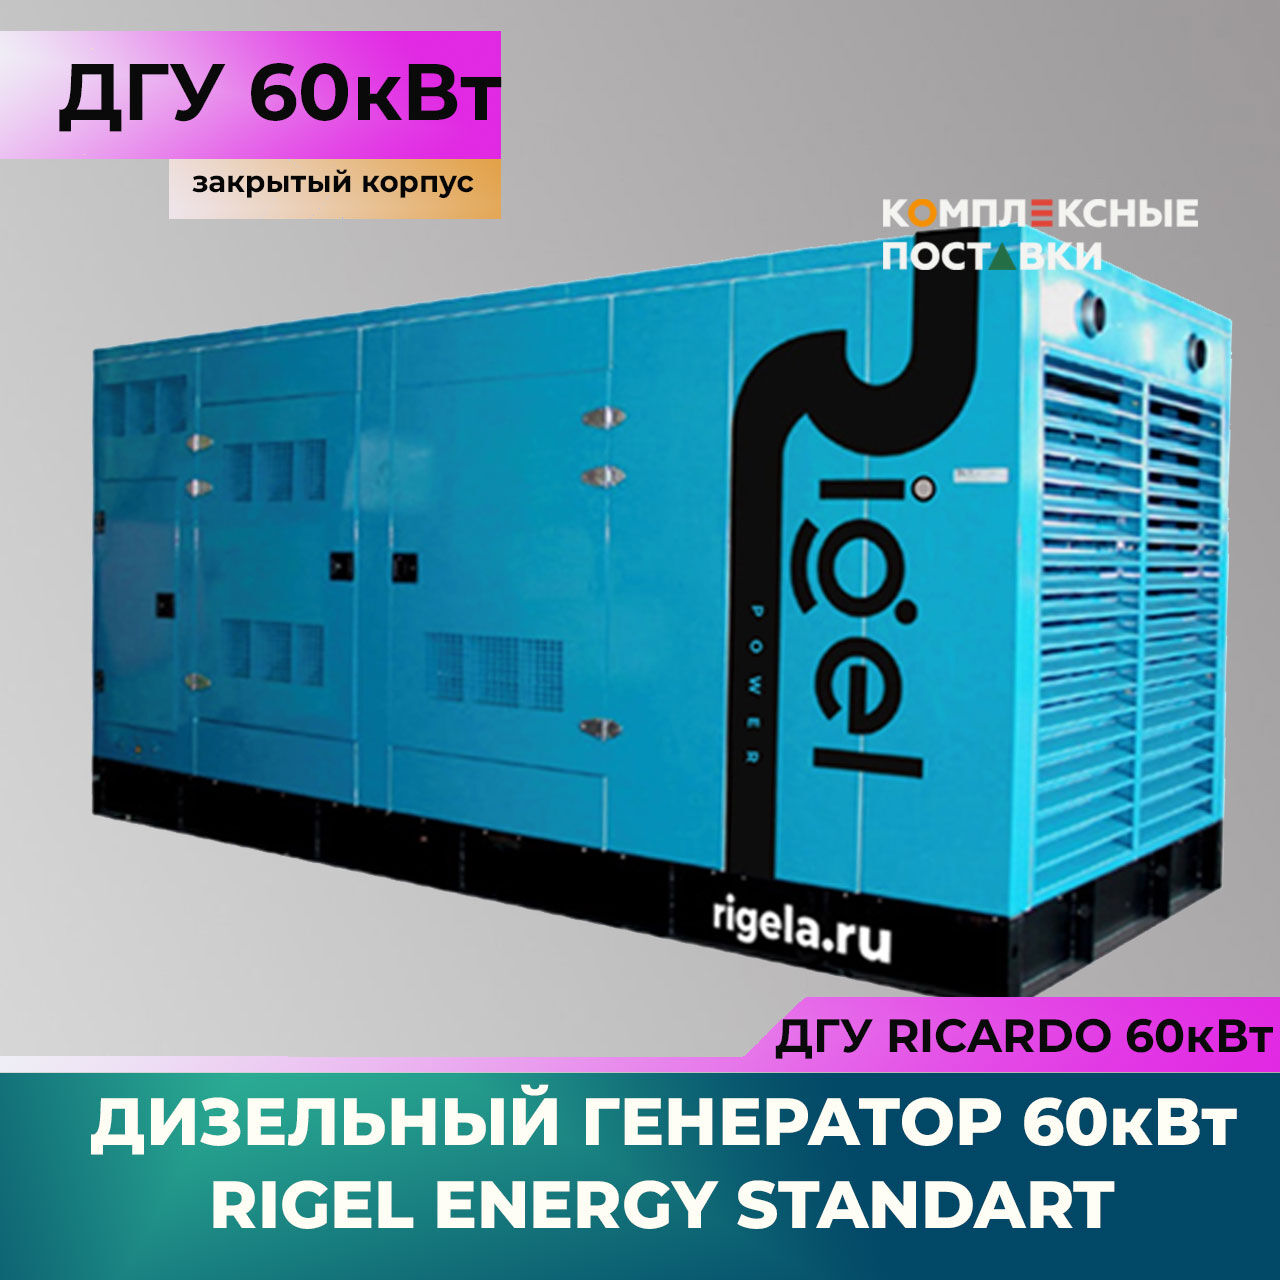 ДГУ 100 кВт Ricardo R Дизельный генератор Rigel Energy Standard RES 100 (100 кВт, Ricardo R) закрытый